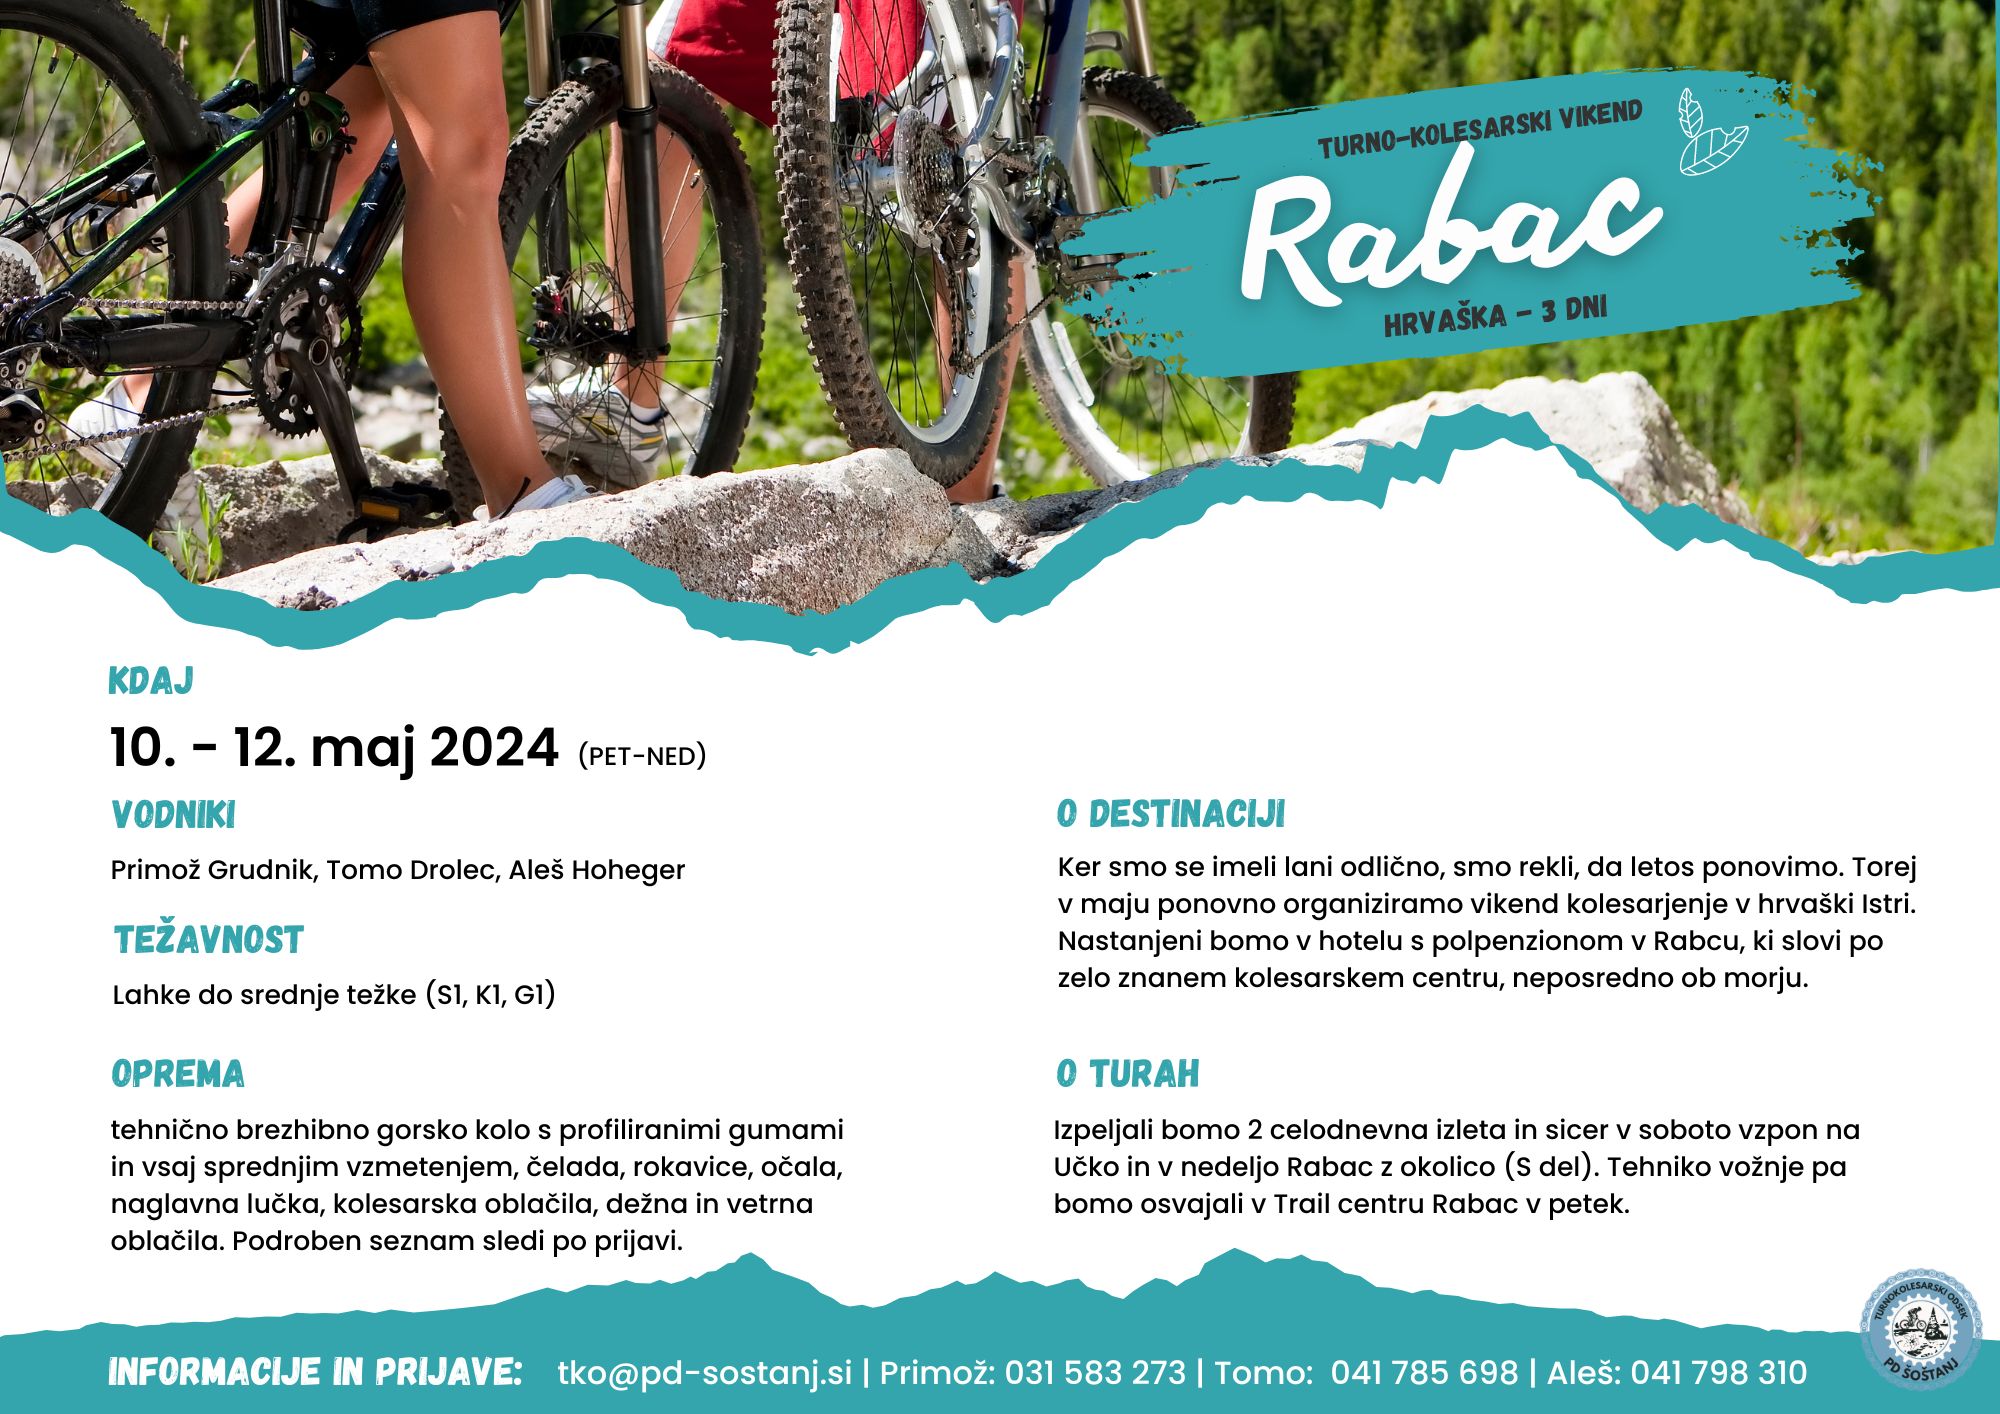 Turno kolesarjenje: Rabac - Hrvaška